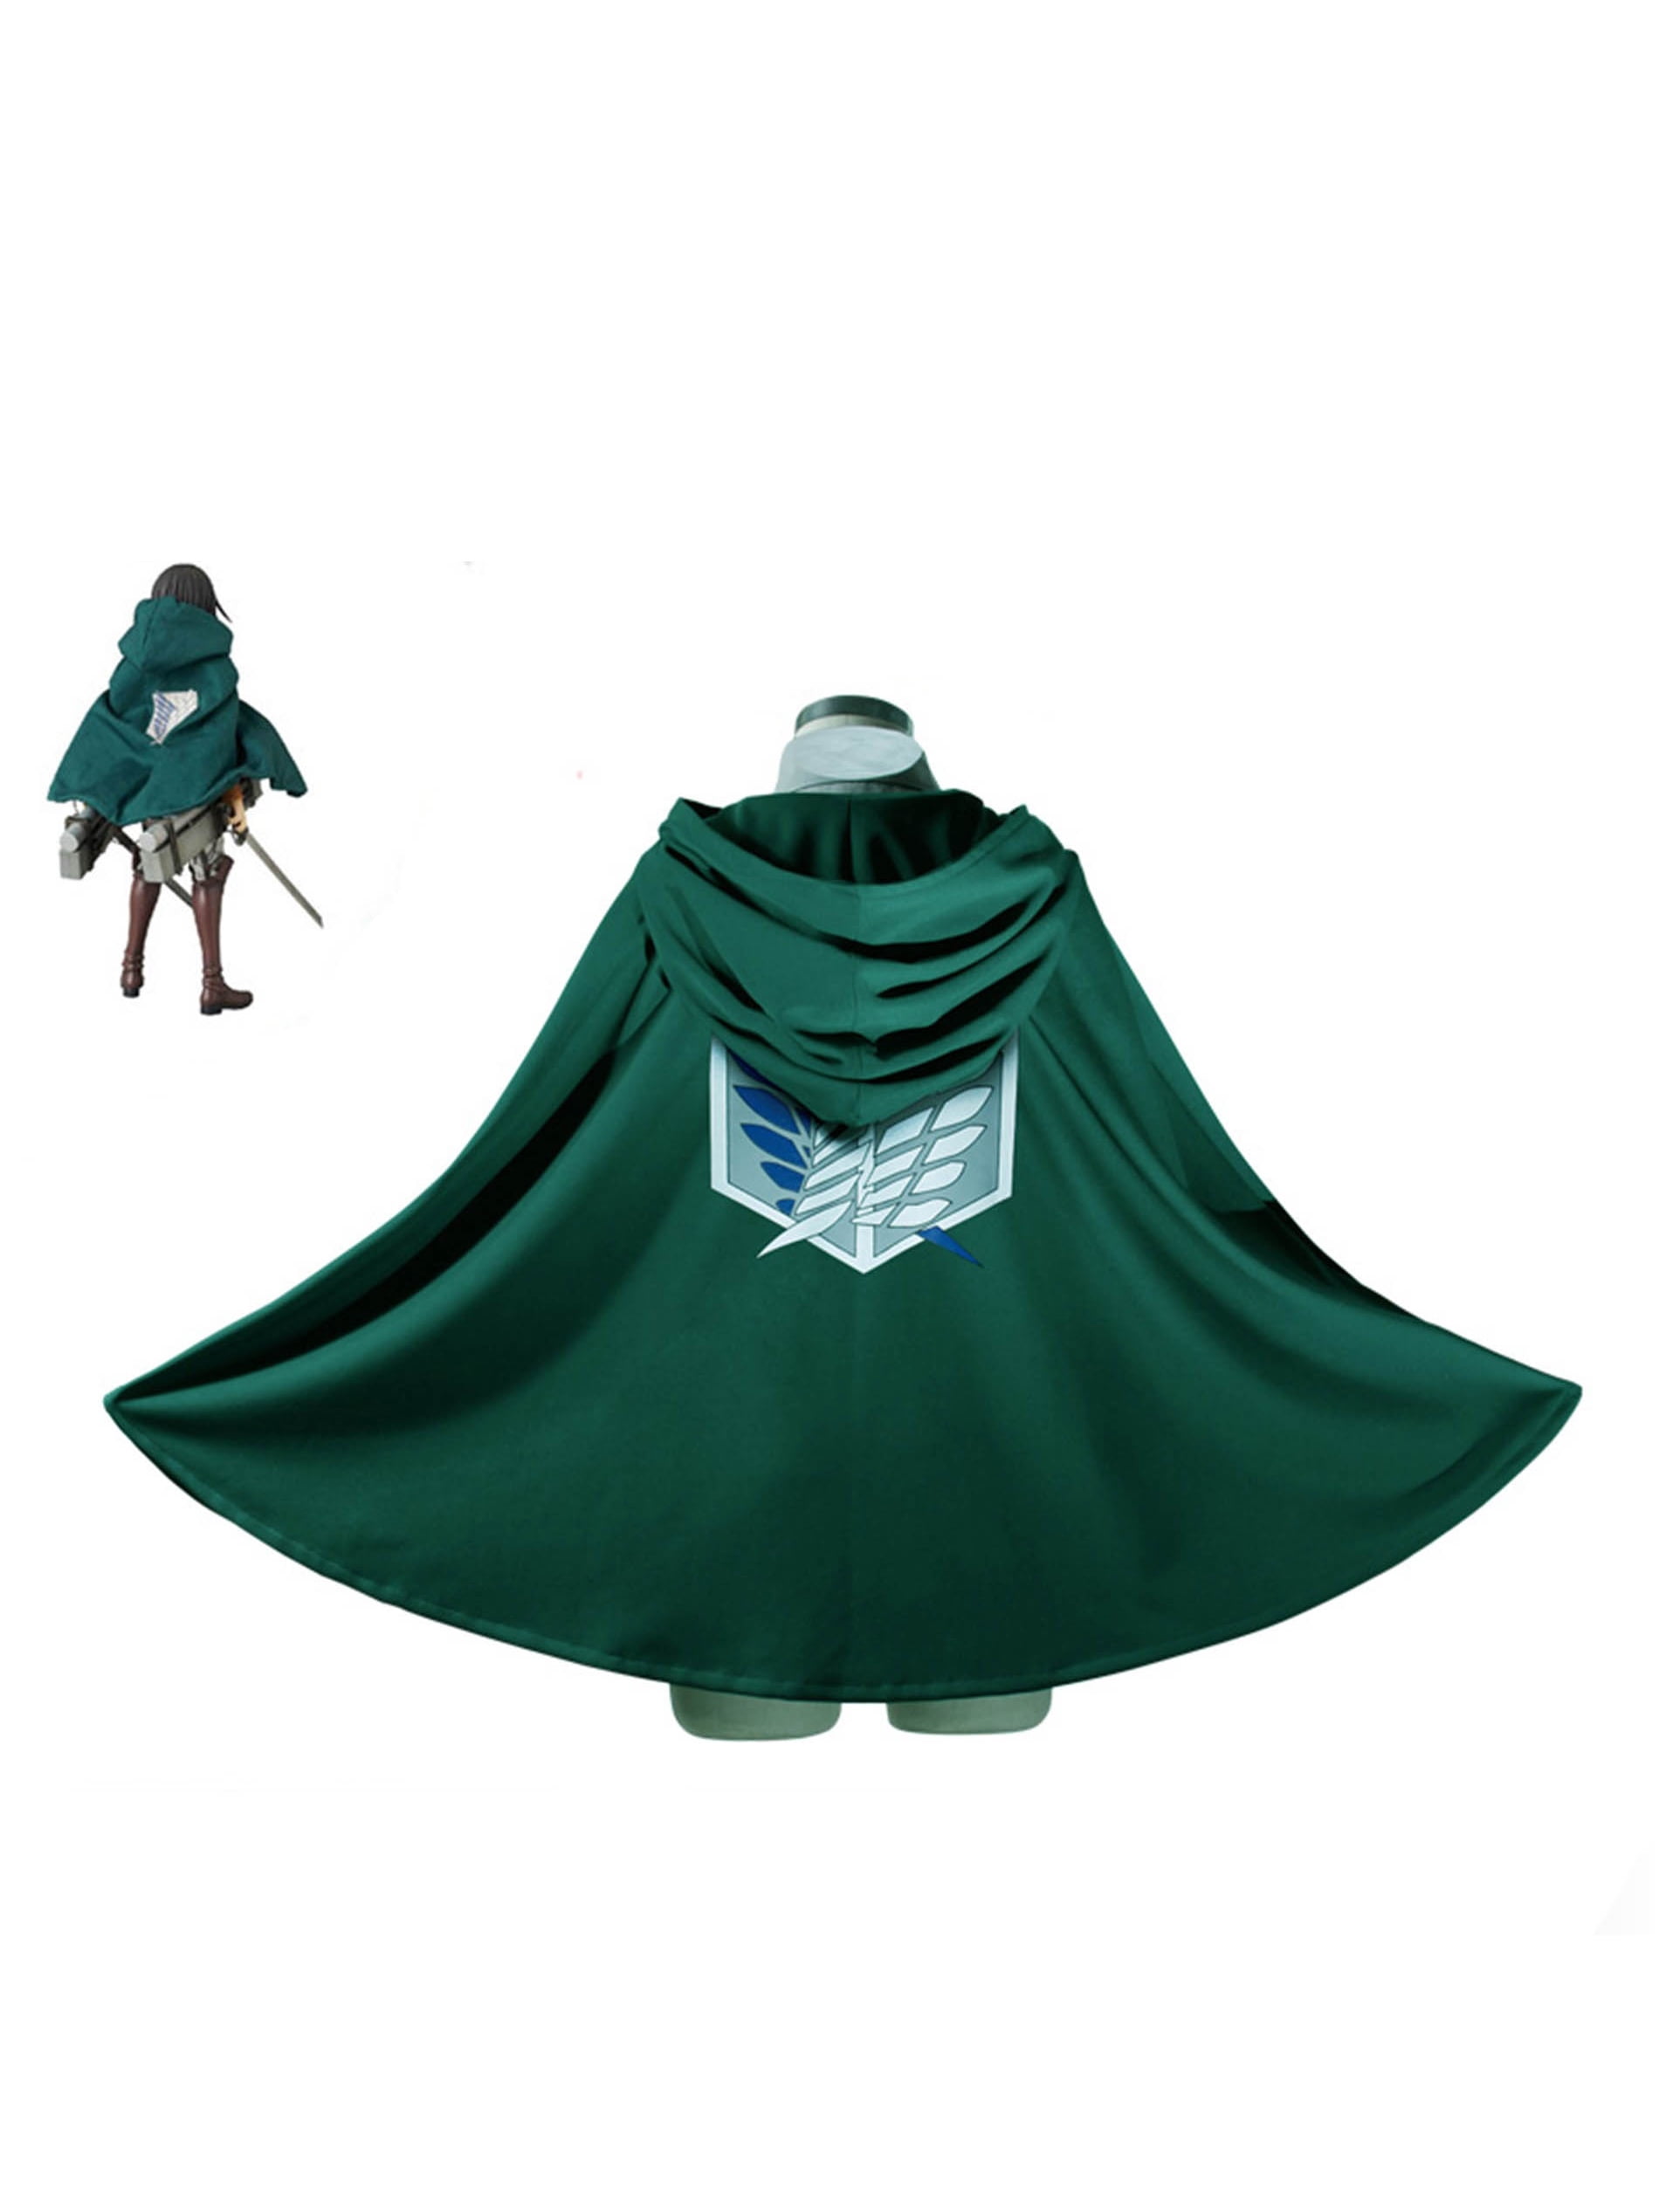 Attack On Titan Cloak Cape Cosplay Costume Top Cardigan Green